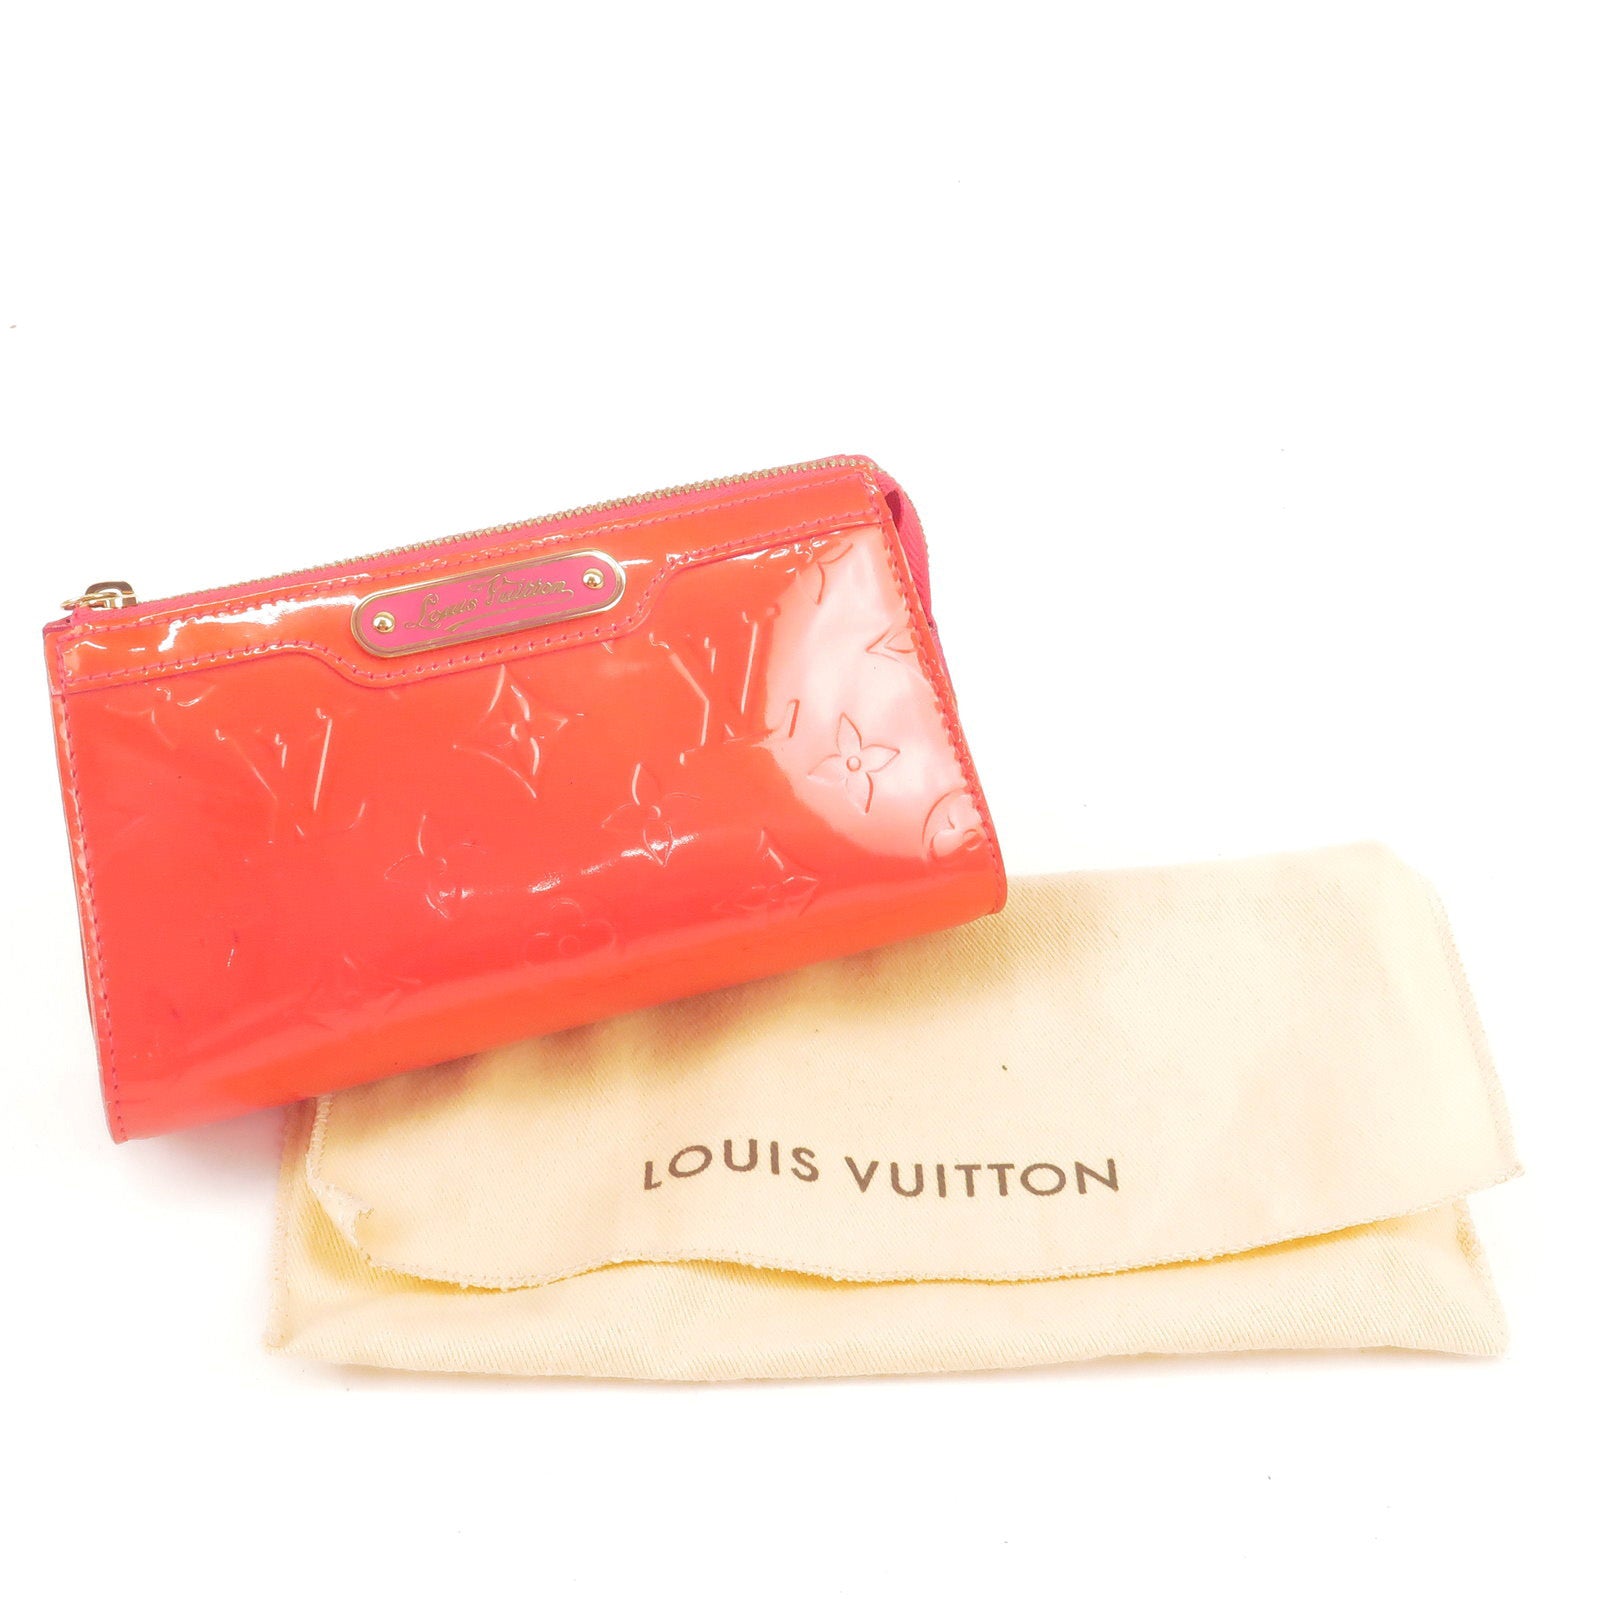 Louis Vuitton Vernis Trousse Cosmetic